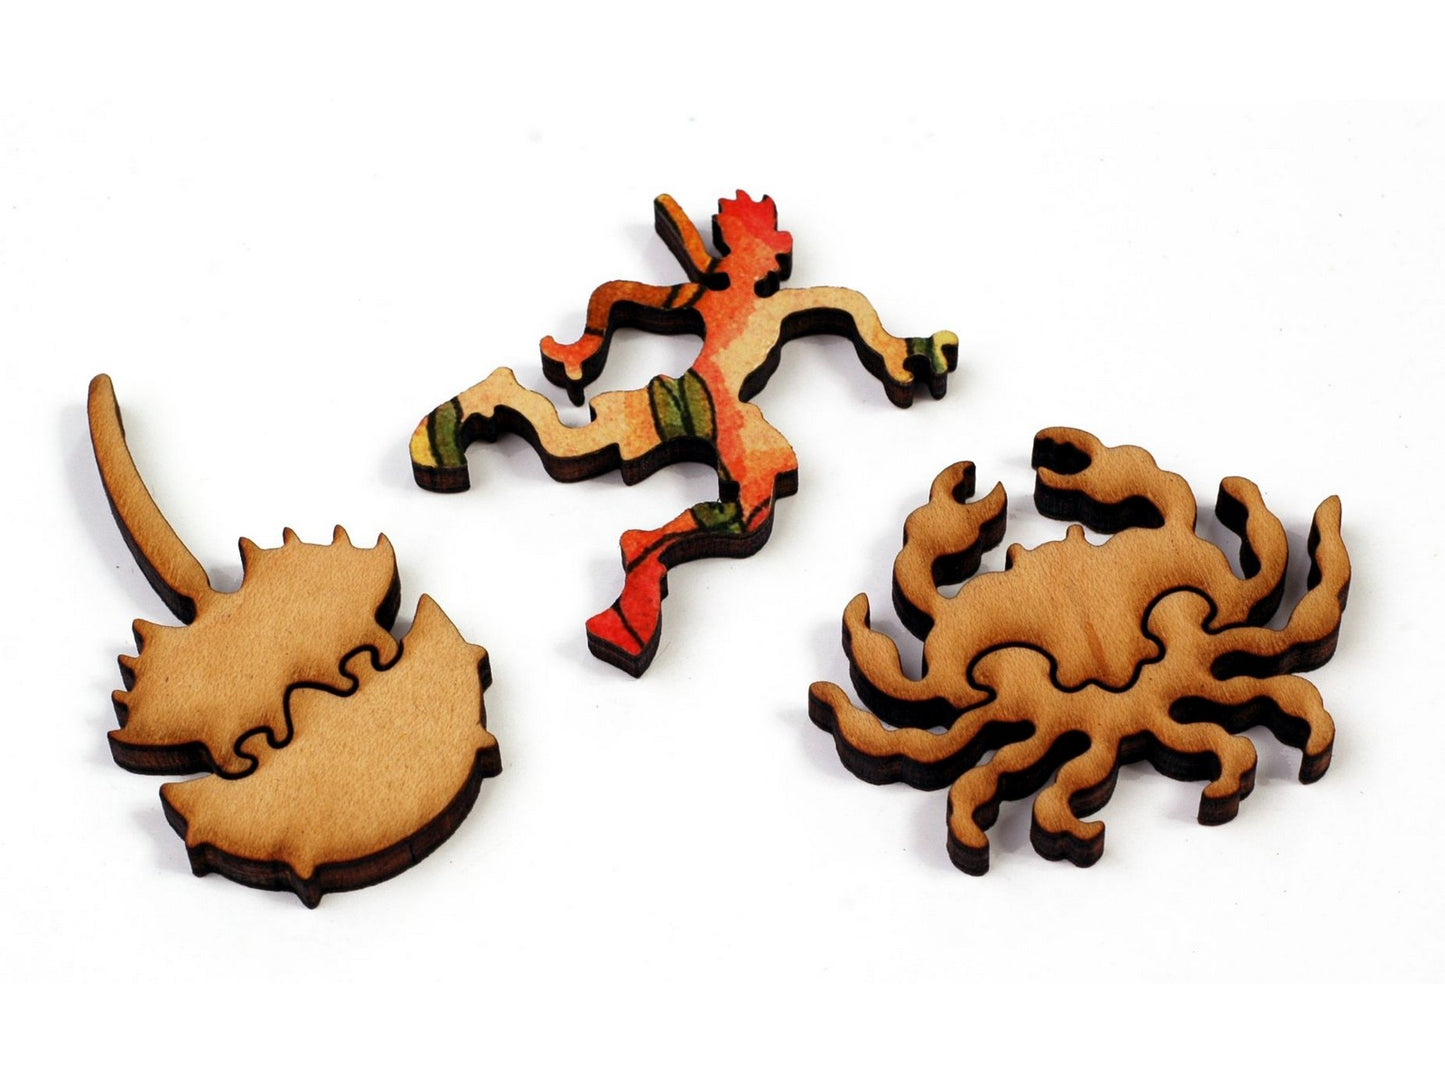 A closeup of pieces showing a diver, crab, and horseshoe crab.